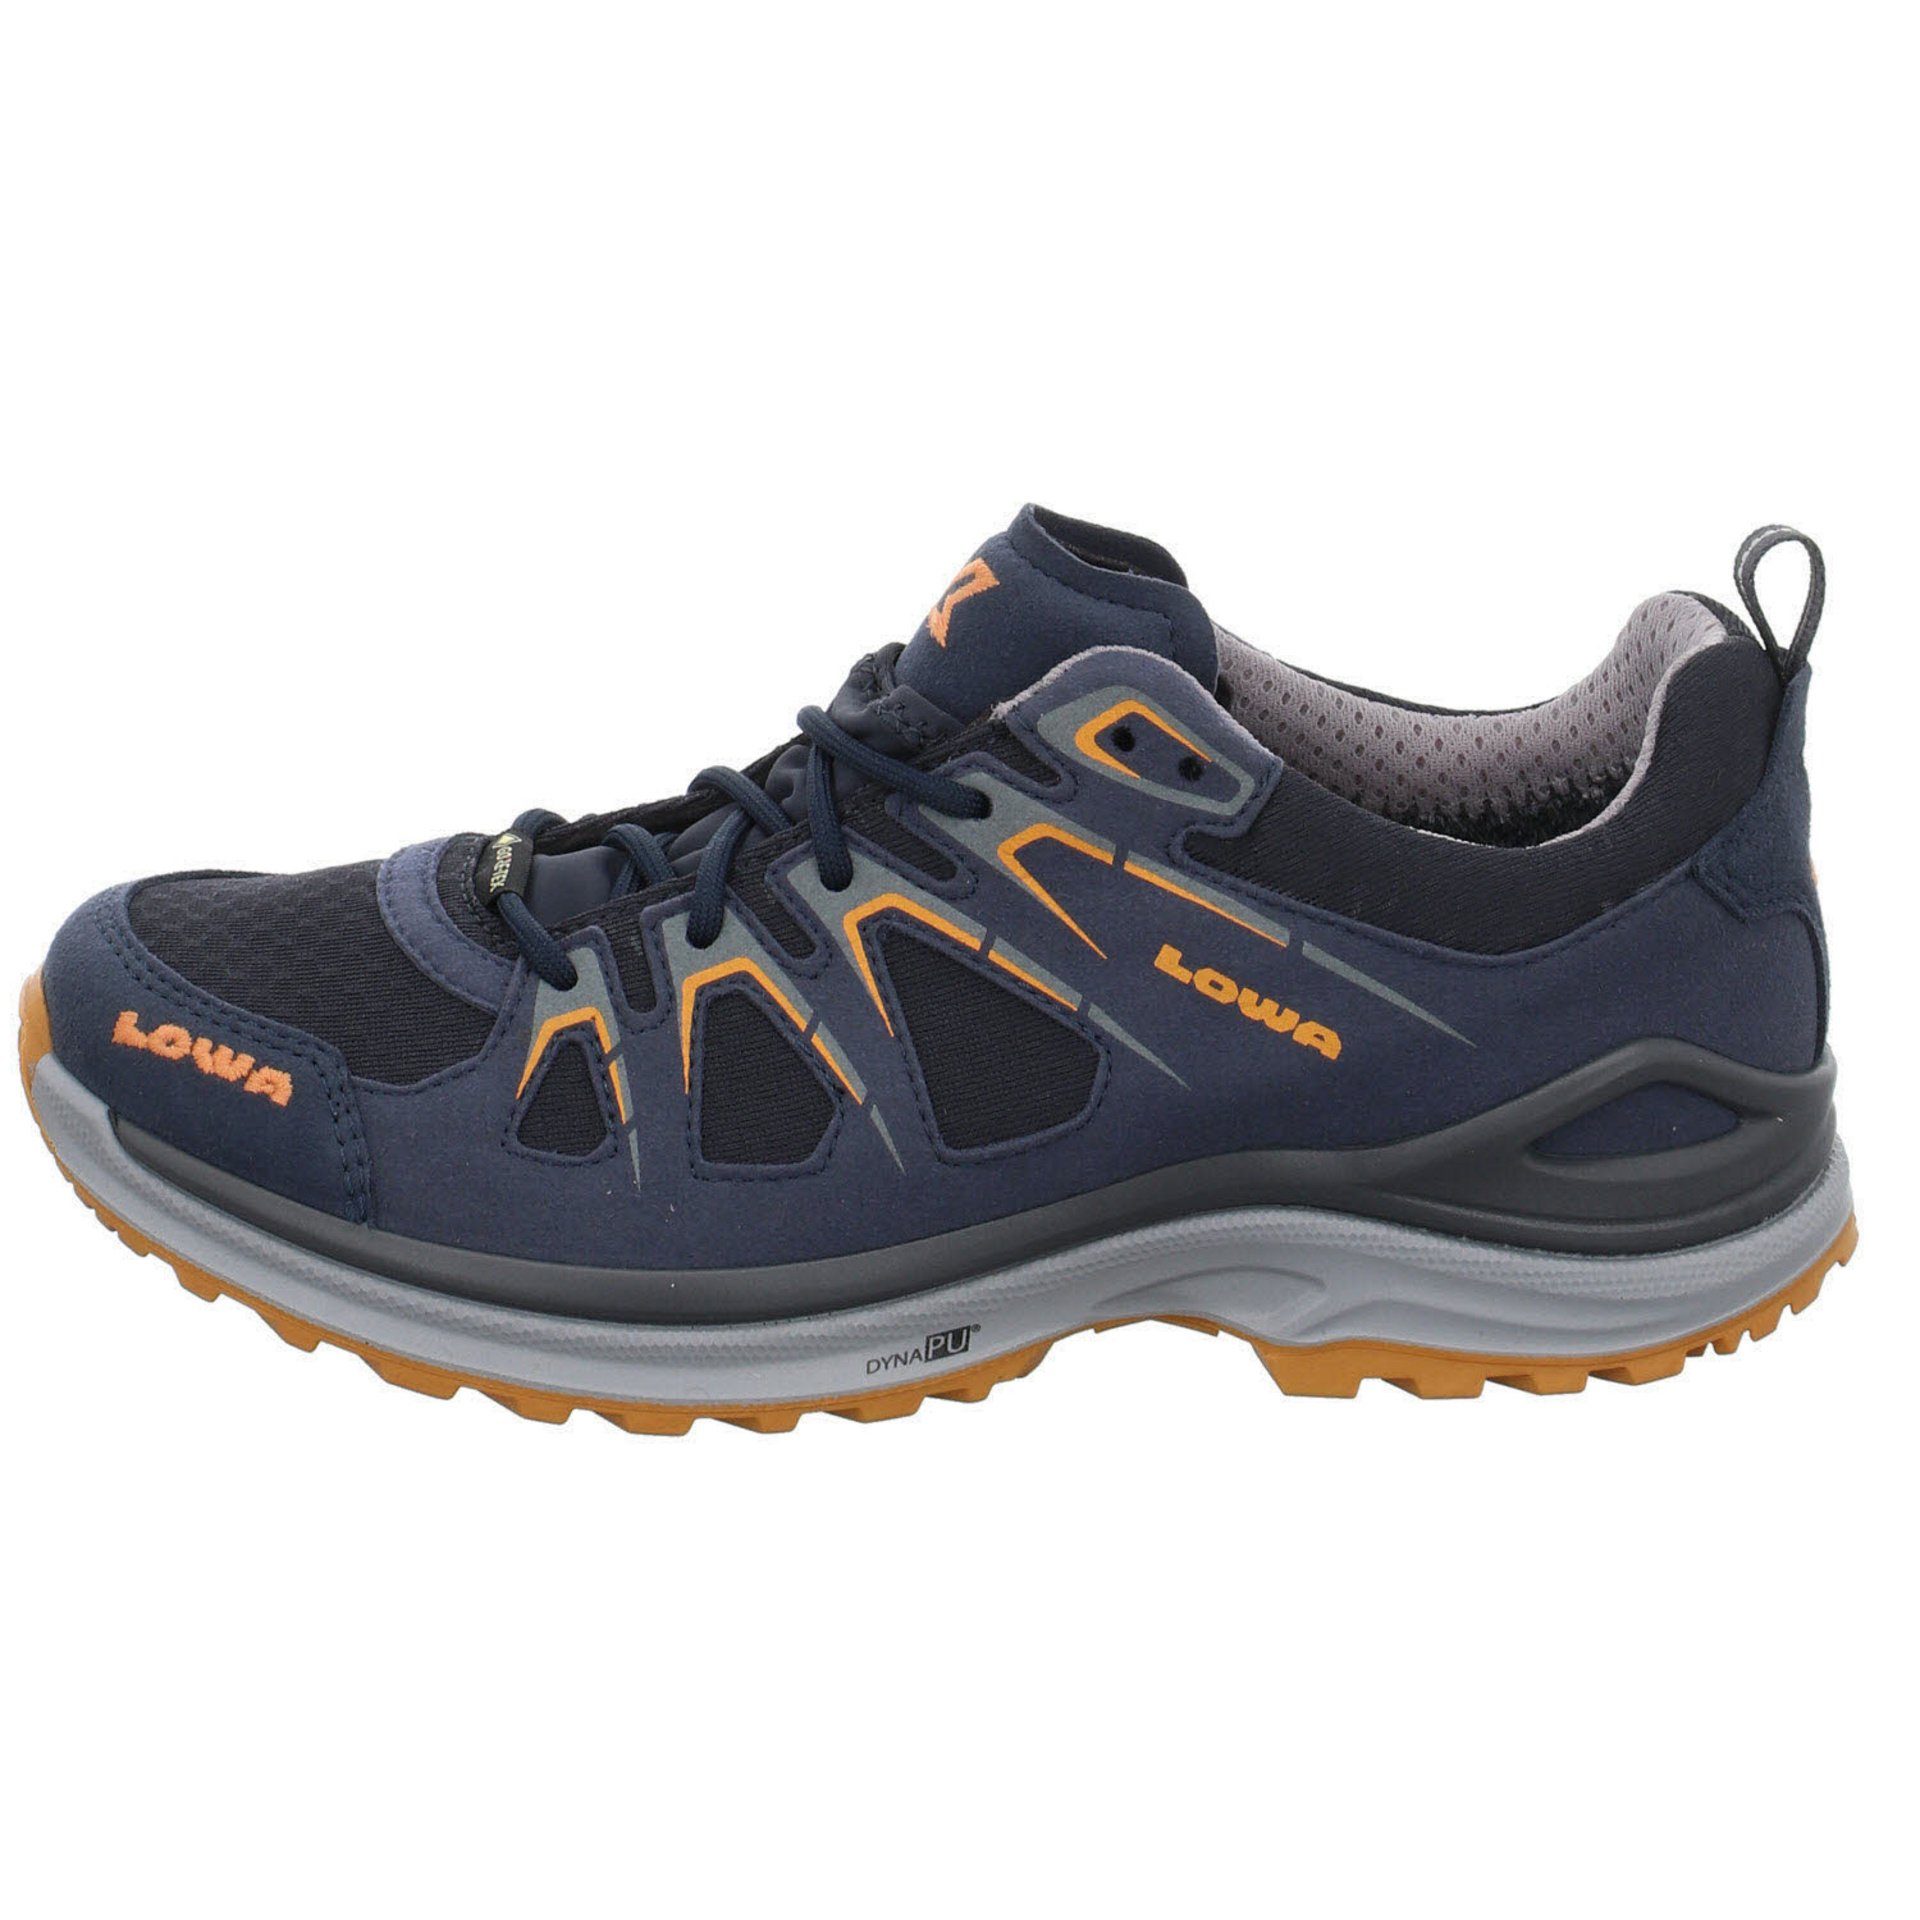 stahlblau/marine Outdoor Lowa Schuhe Damen Synthetikkombination Lo Innox EVO Outdoorschuh Outdoorschuh